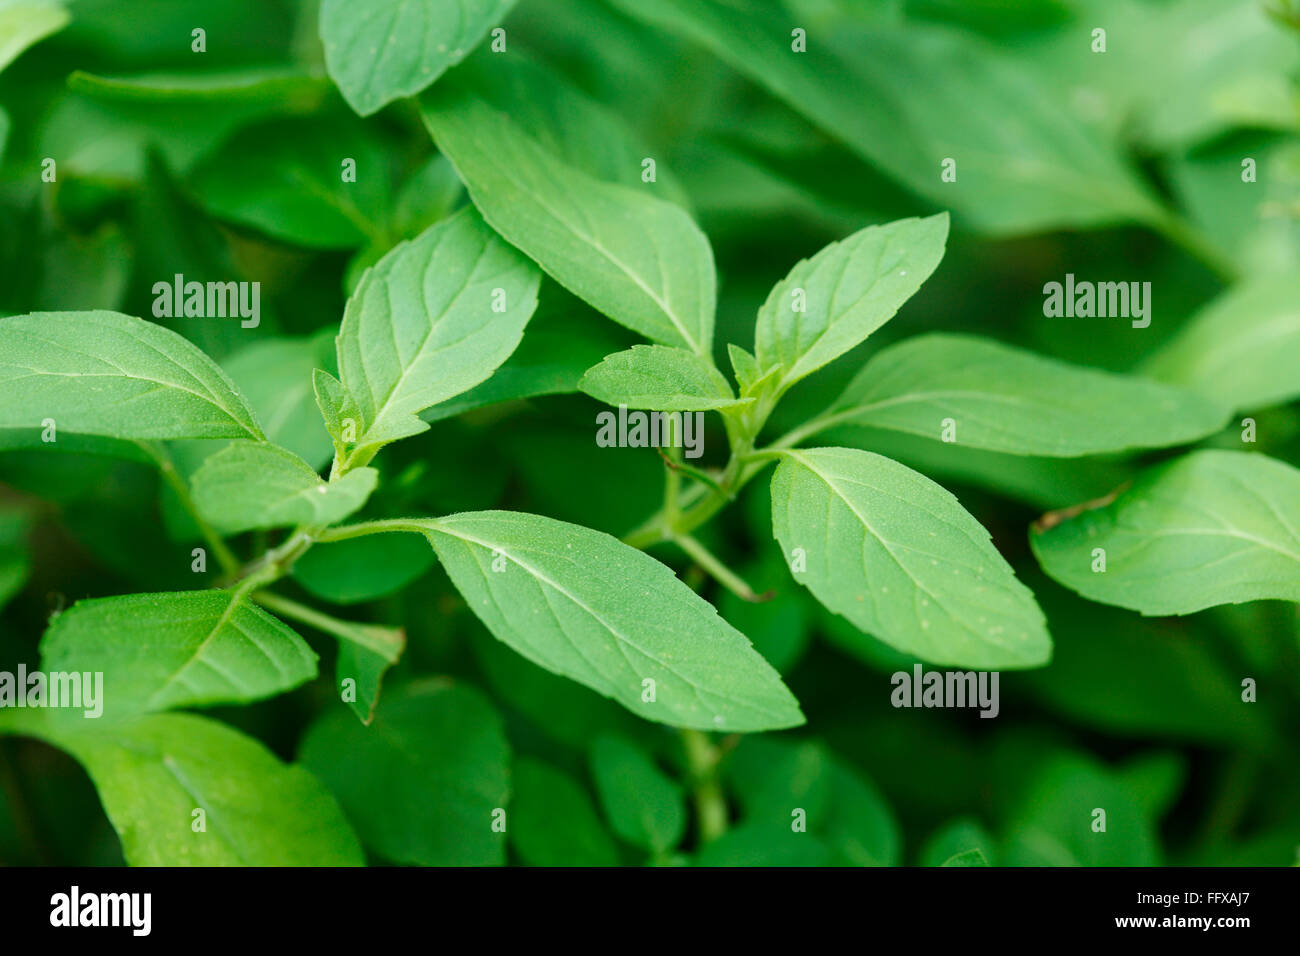 Medicinal plant herb Common Name Vicks plant Peppermint plant botanical name Mentha piperita Stock Photo